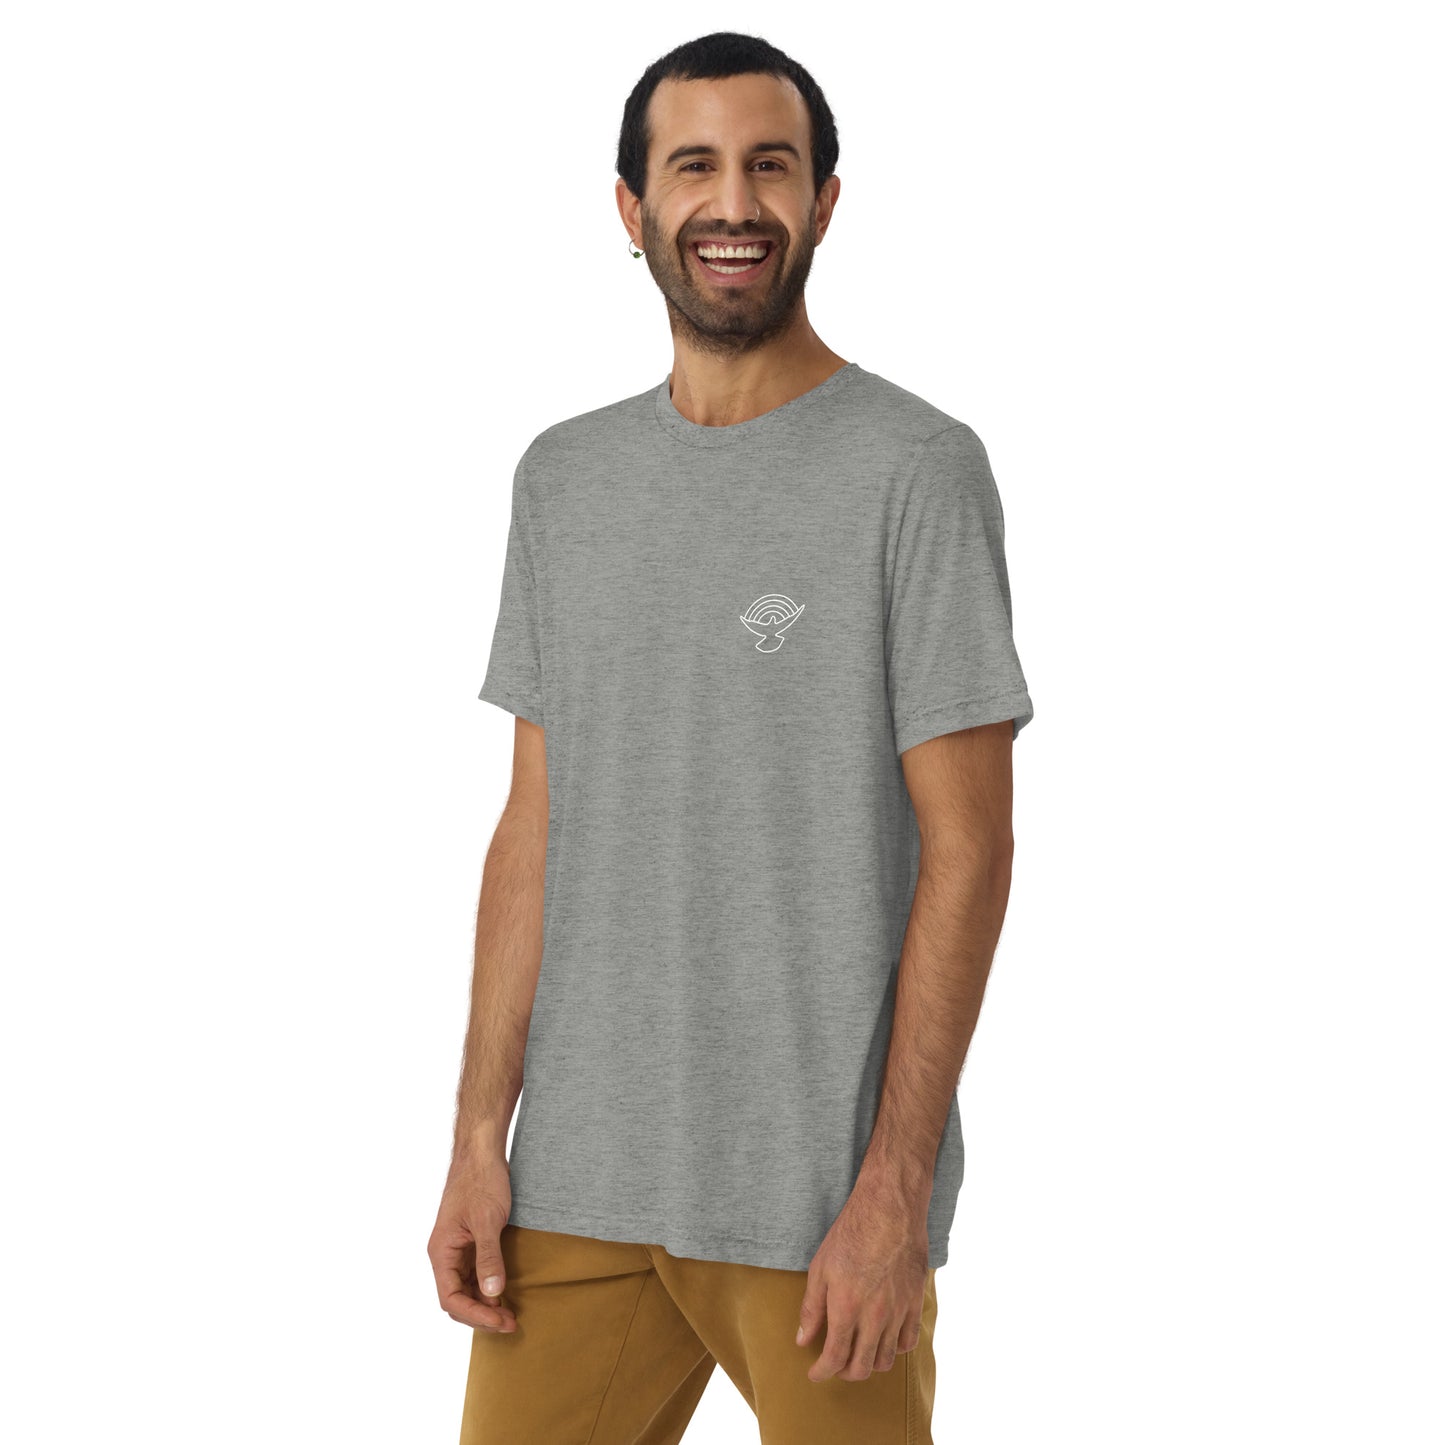 Iris Global Core Values Unisex tri-blend t-shirt